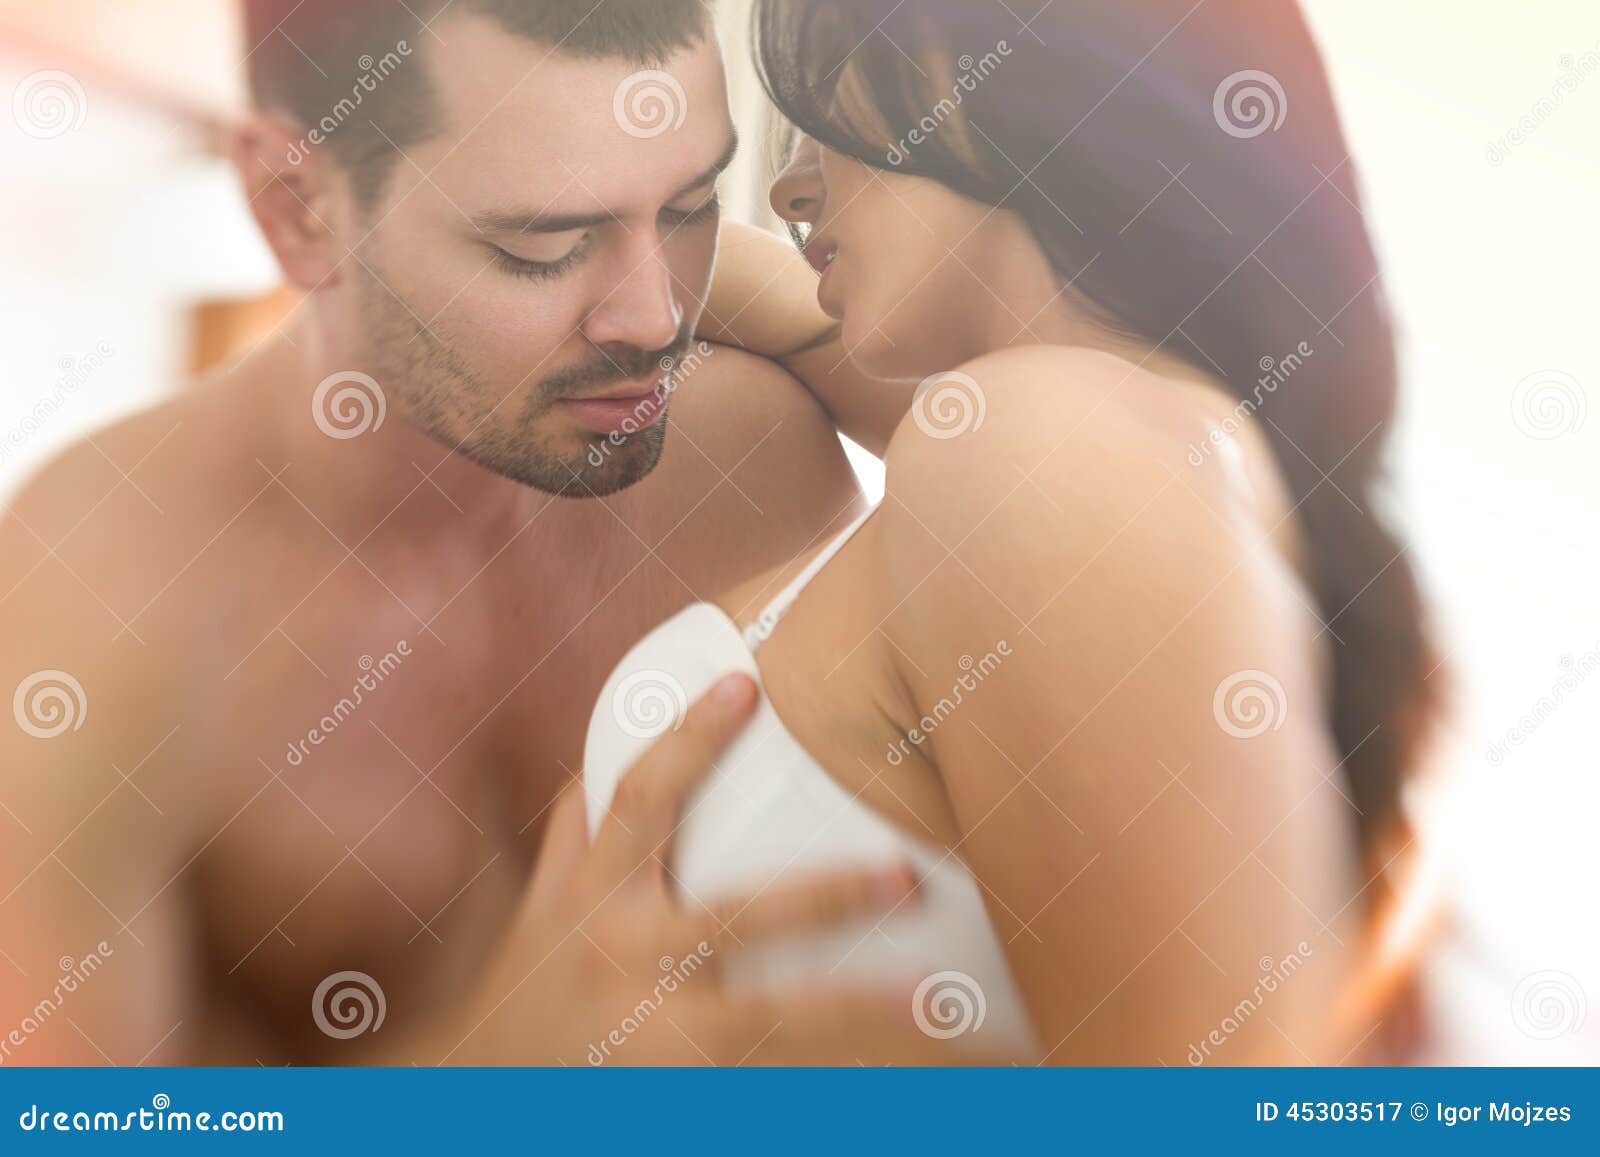 Man hand take woman breast stock image pic photo